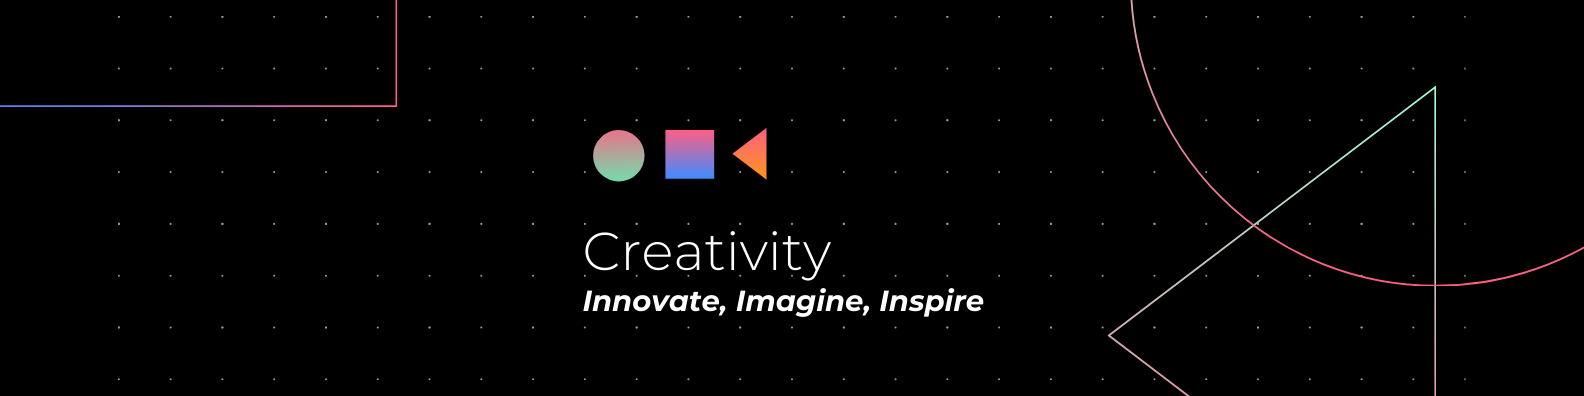 creativity banner 